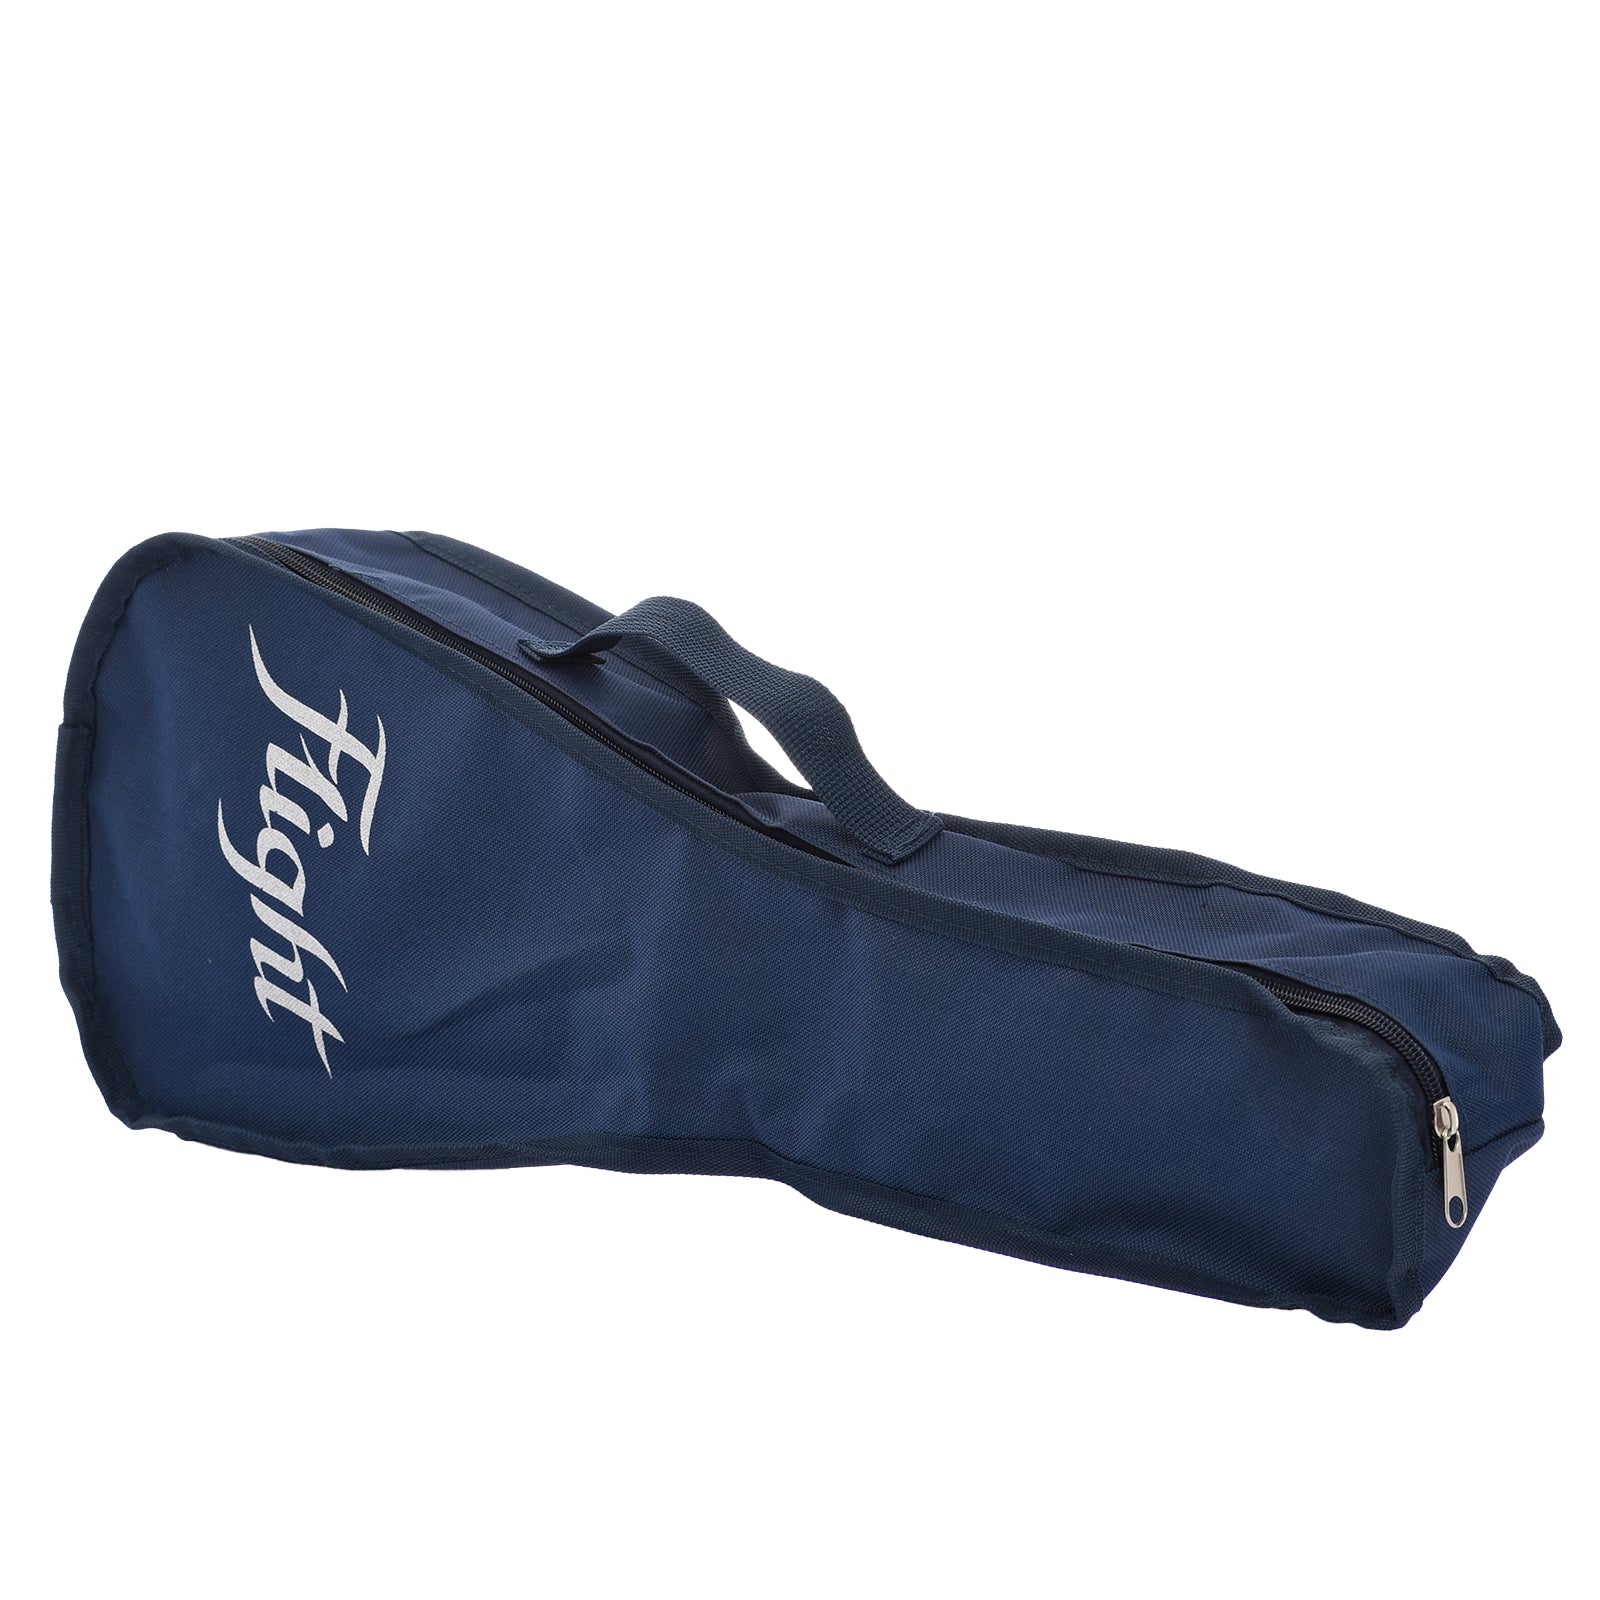 Gig bag for Flight TUS35 Travel Series Soprano Ukulele, Natural